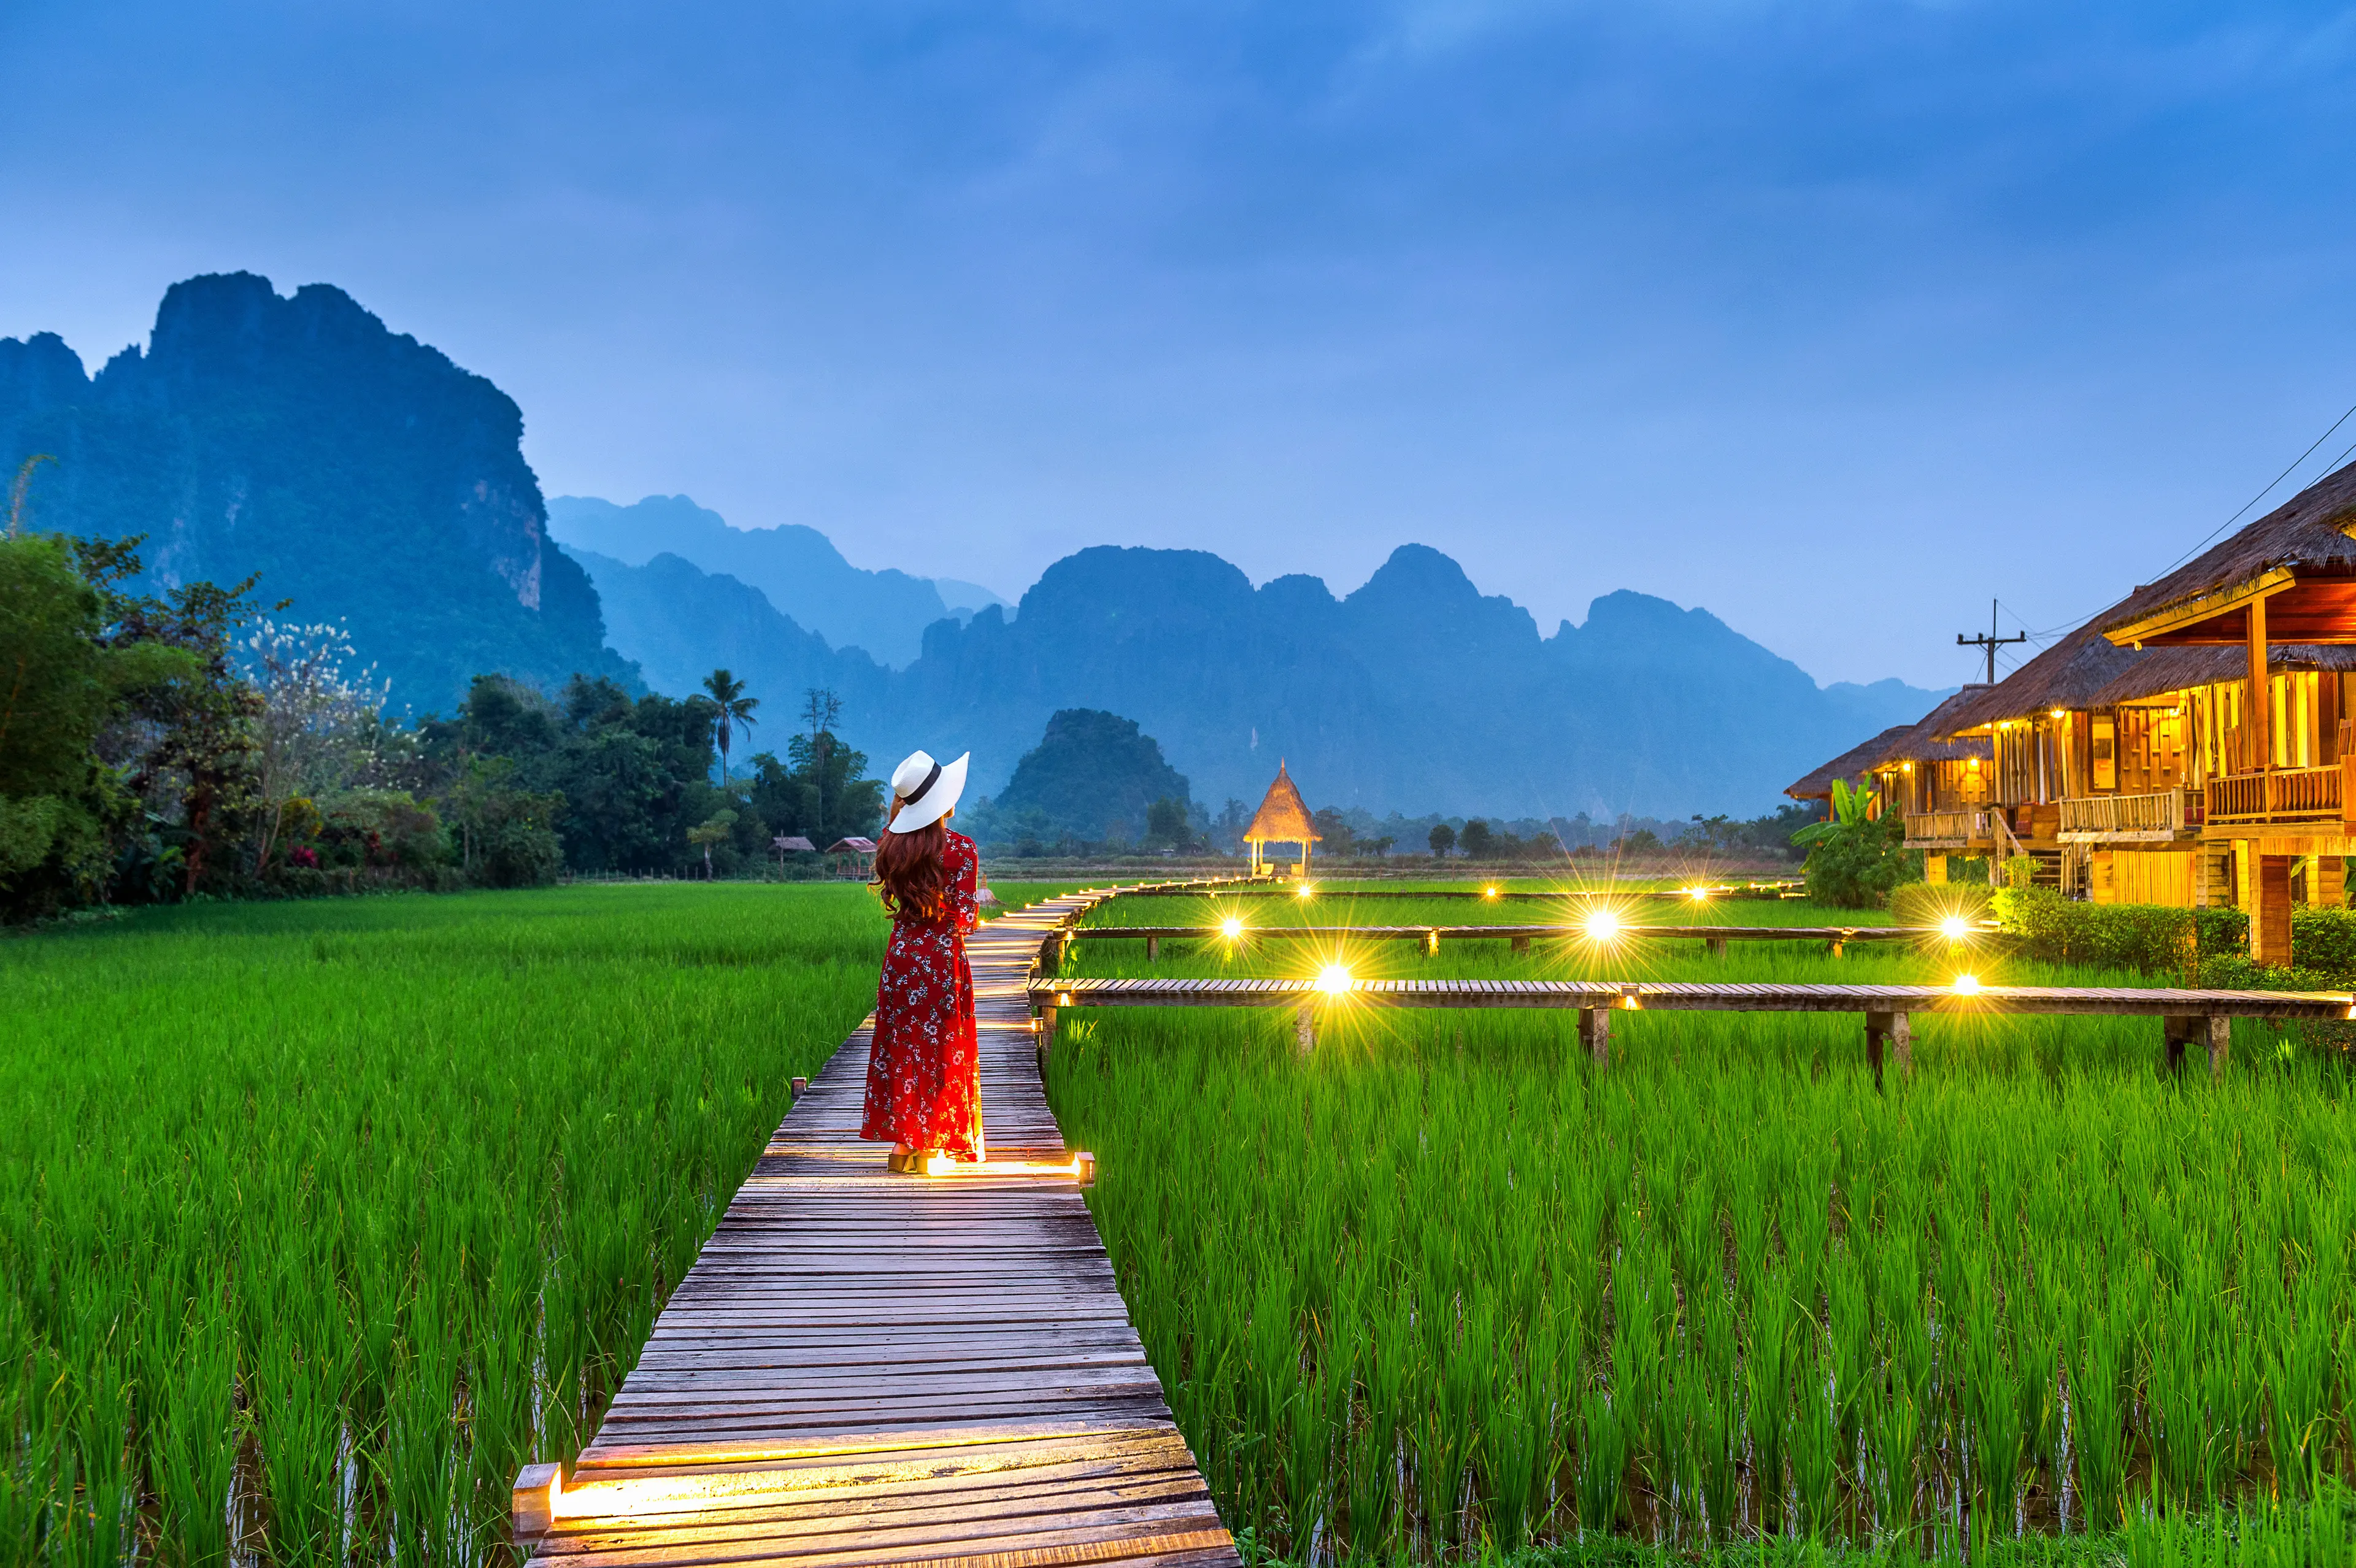 Rice fields in Vang Vieng